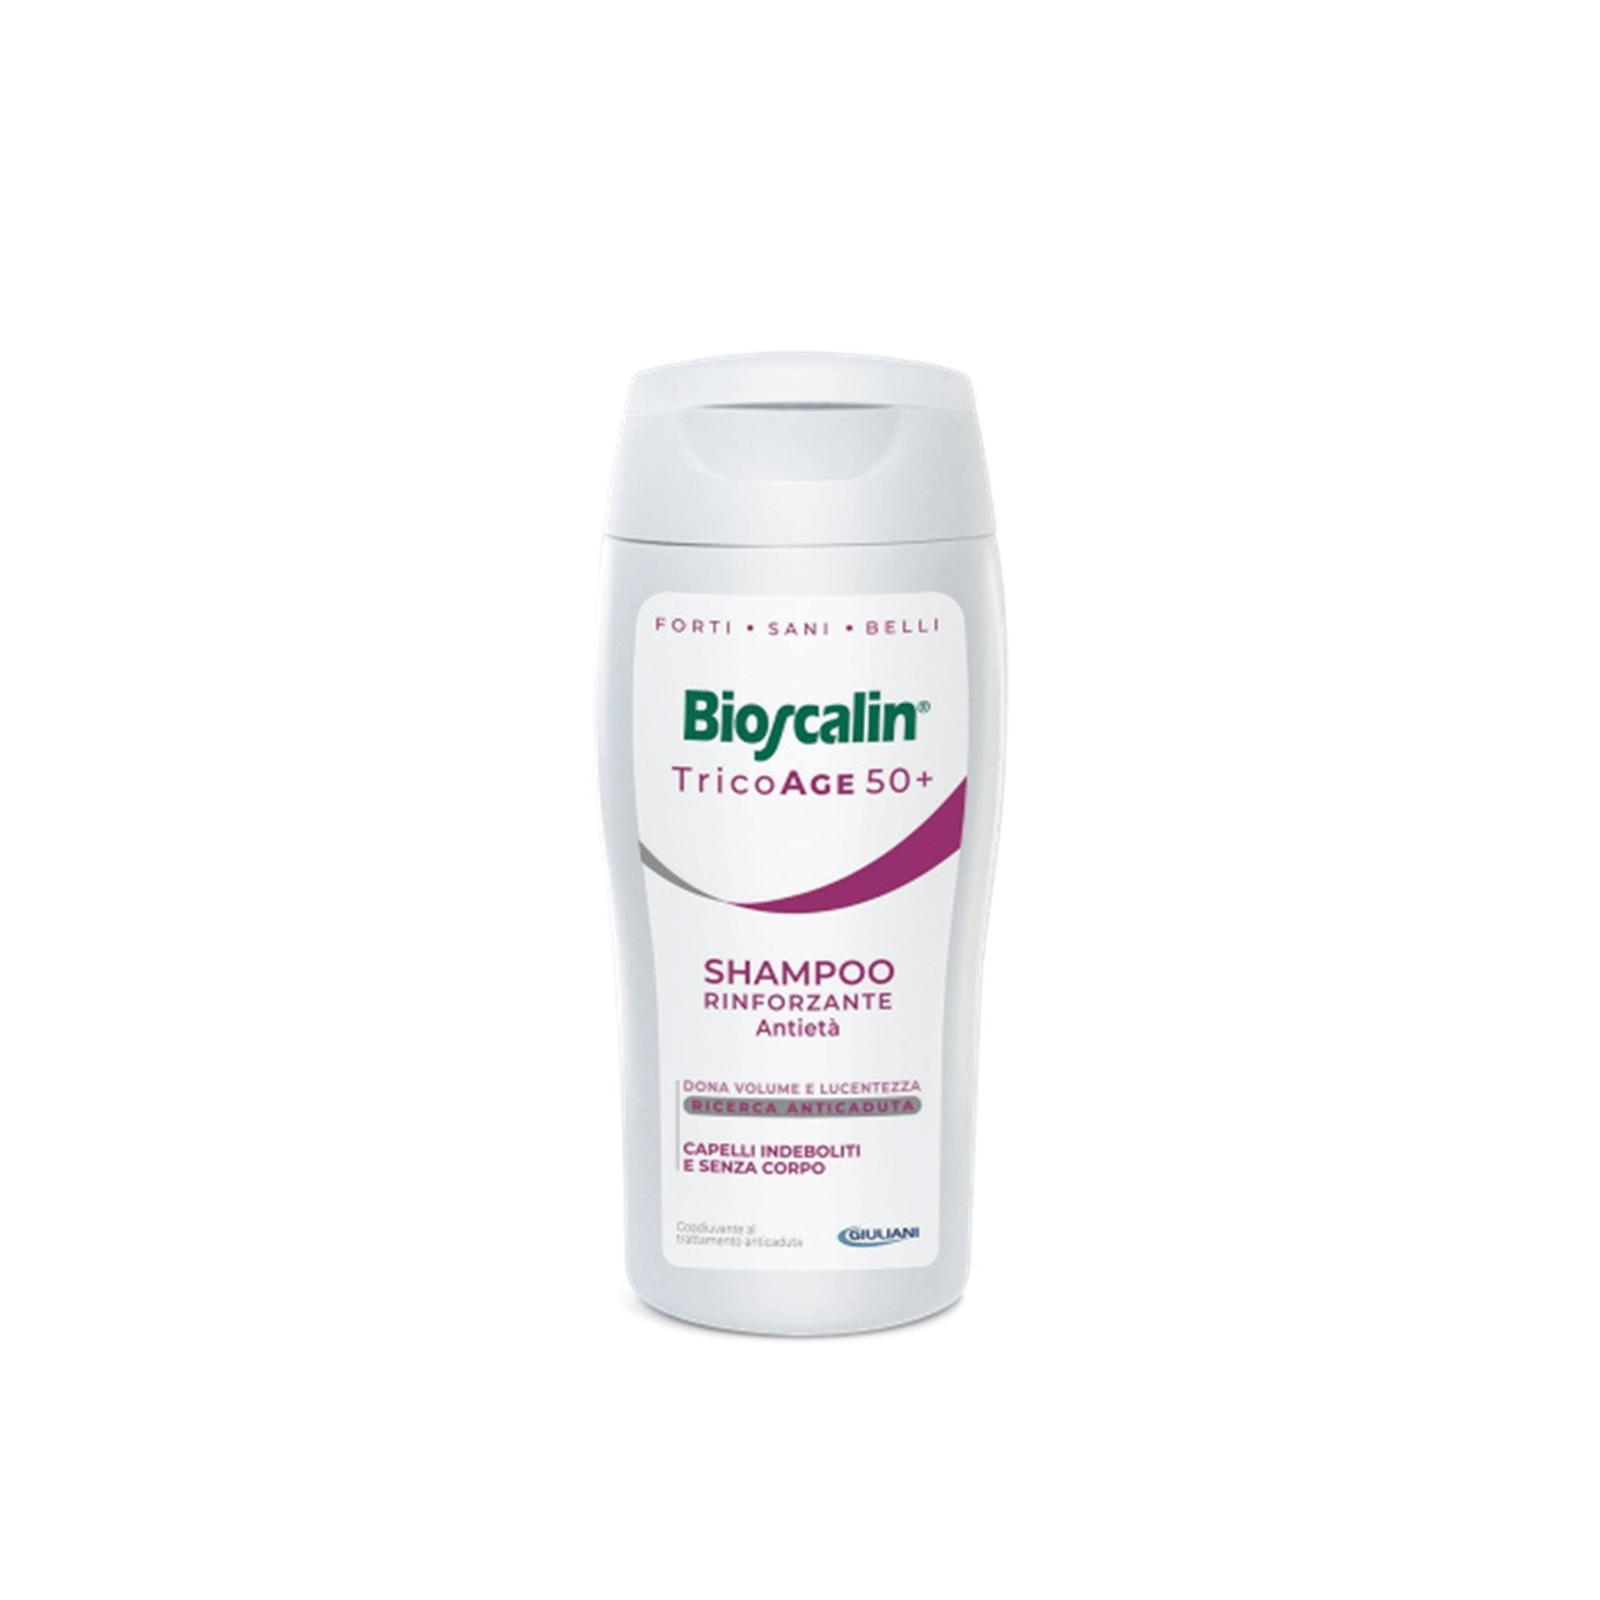 Bioscalin TricoAge 50+ Anti-Aging Fortifying Shampoo 200ml (6.76 fl oz)